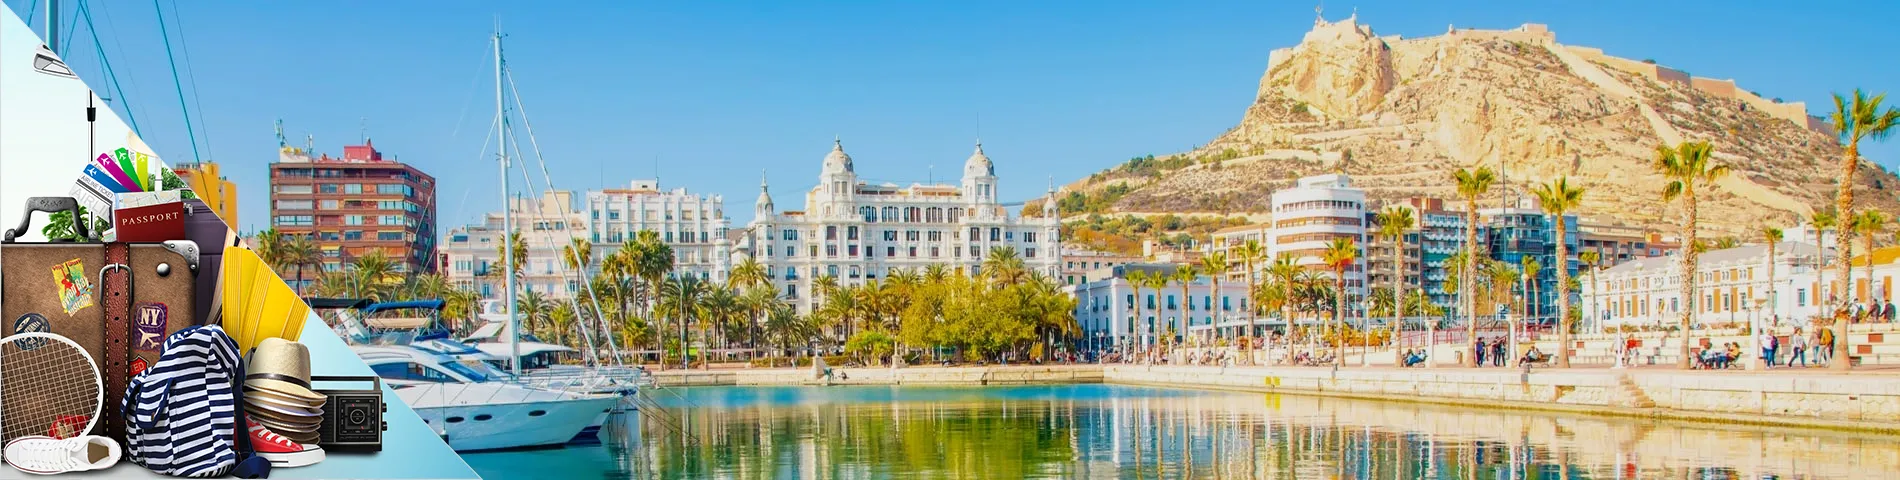 Аликанте - Испанский для Туризма